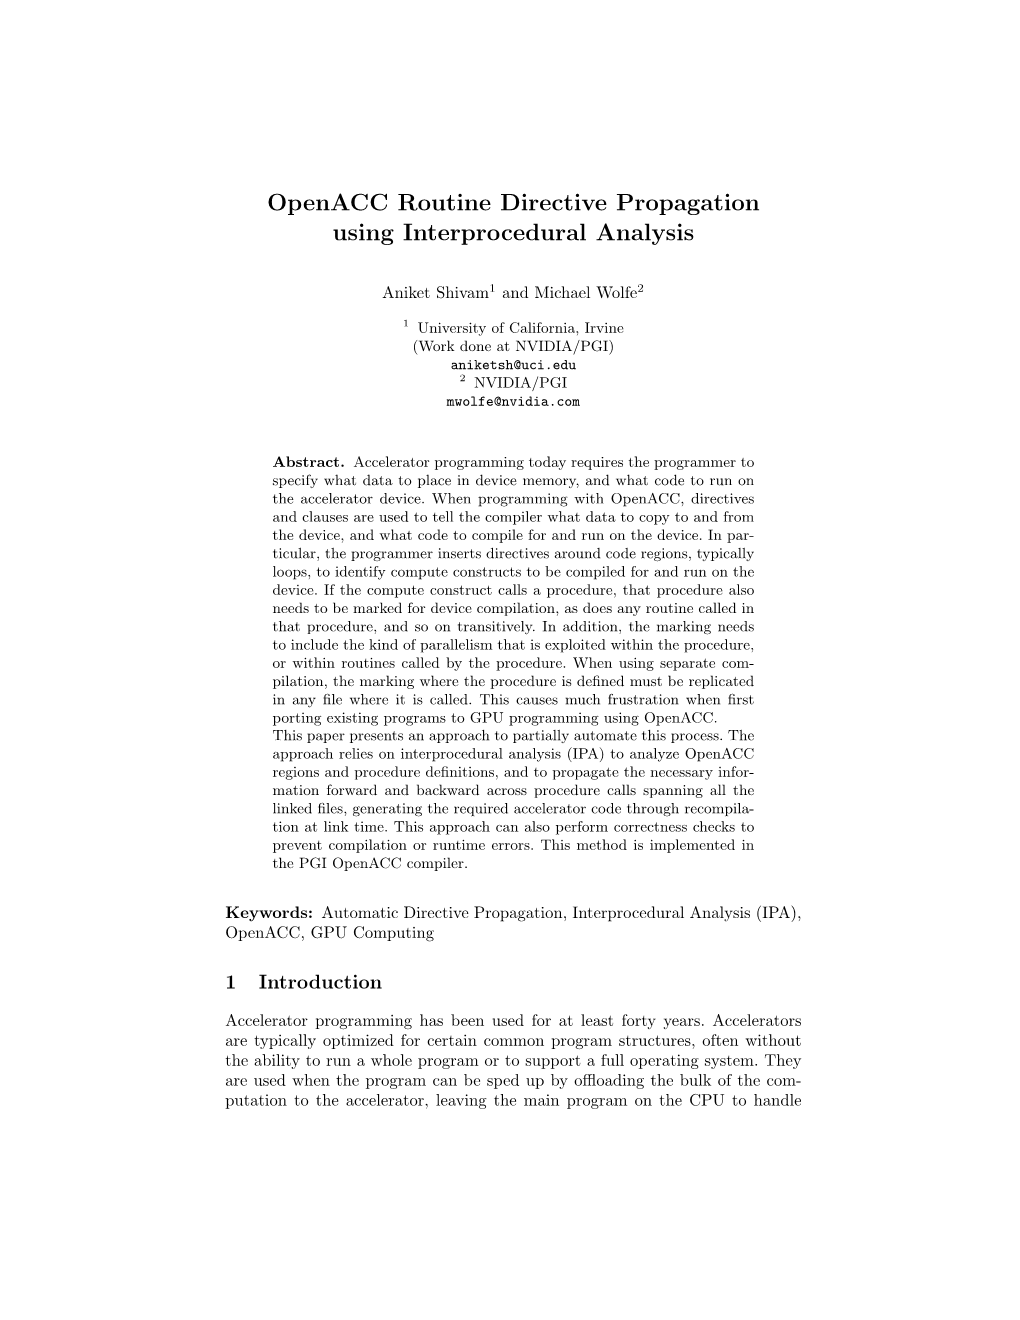 Openacc Routine Directive Propagation Using Interprocedural Analysis